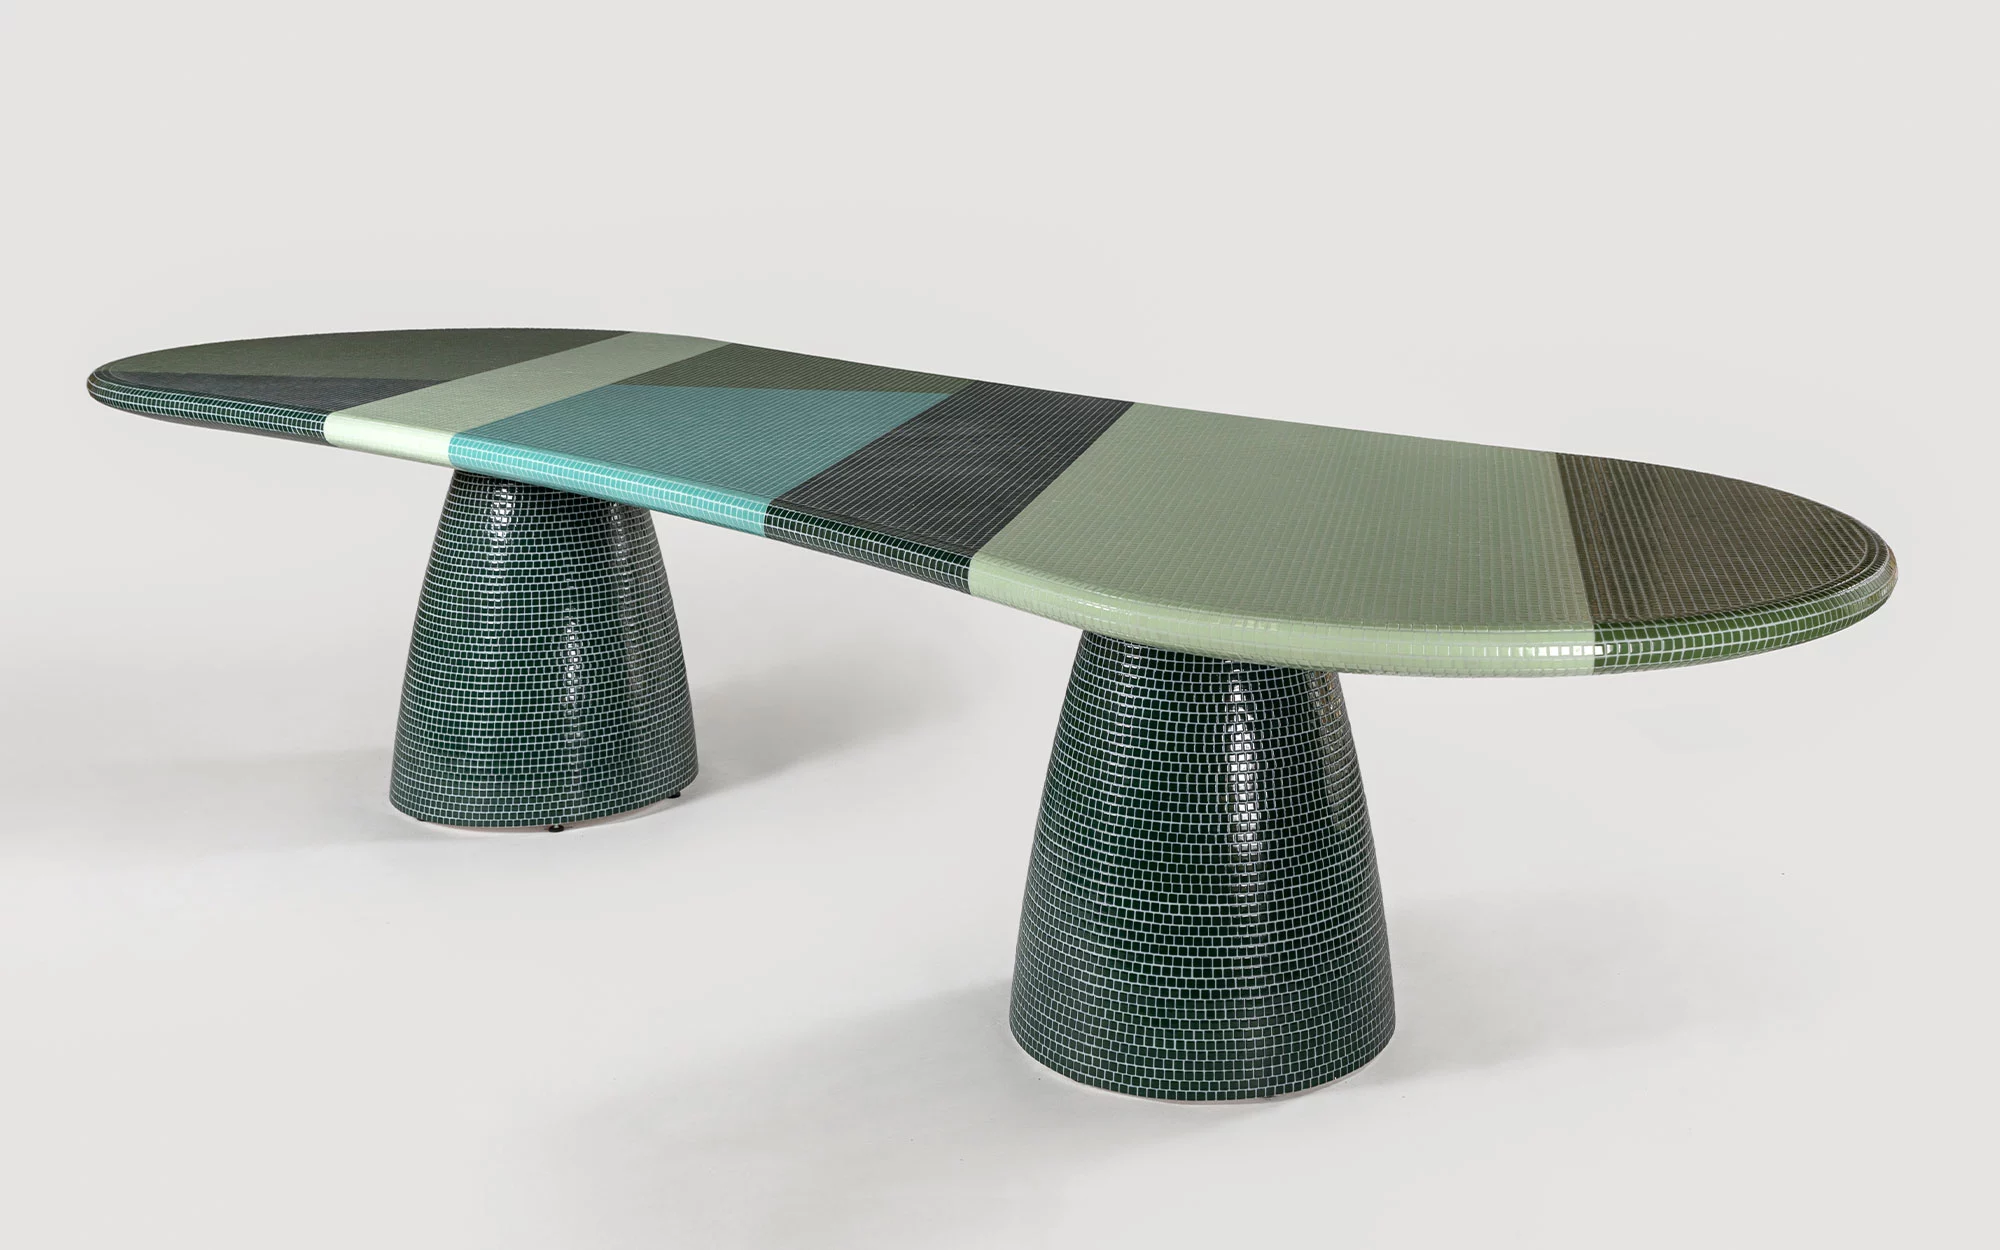 Umbria Dining Table - Alessandro Mendini - Floor light - Galerie kreo